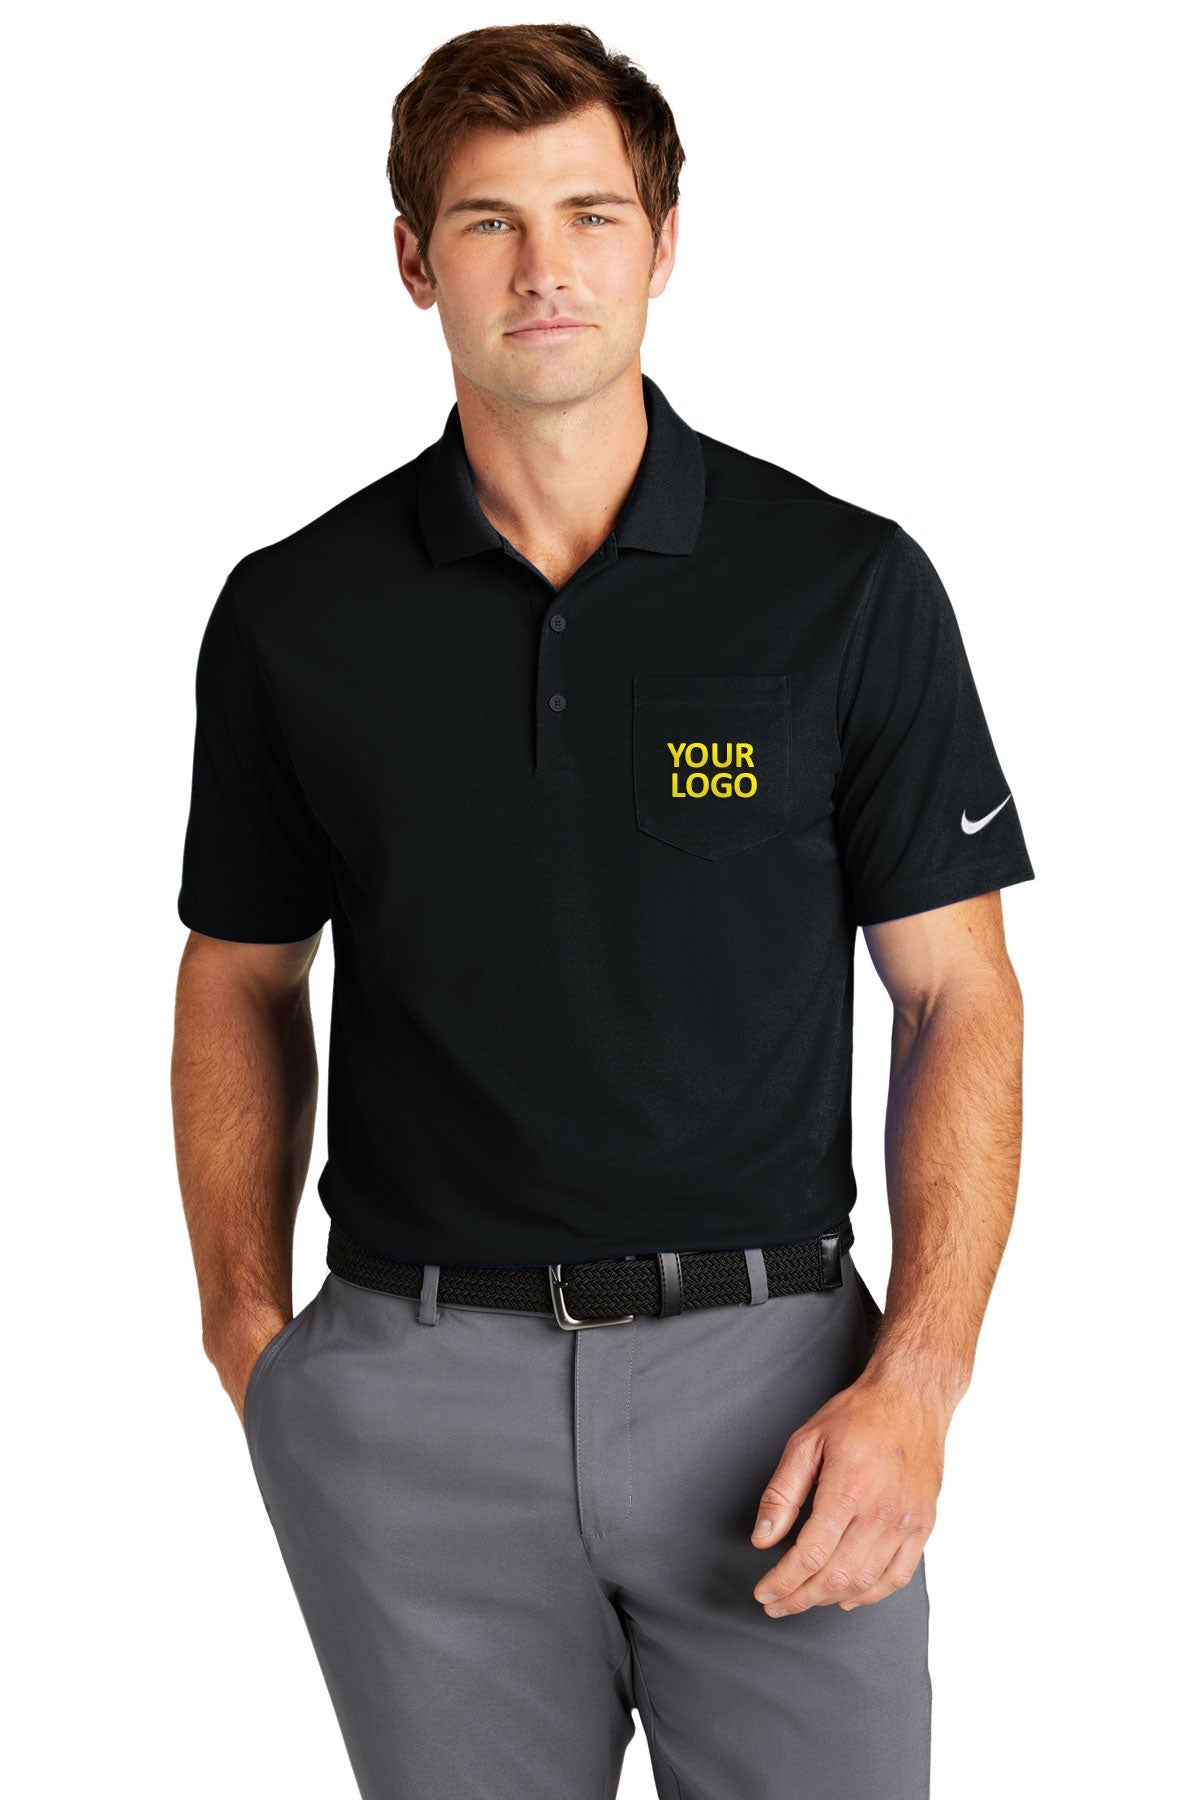 Nike Black NKDC2103 custom logo polo shirts